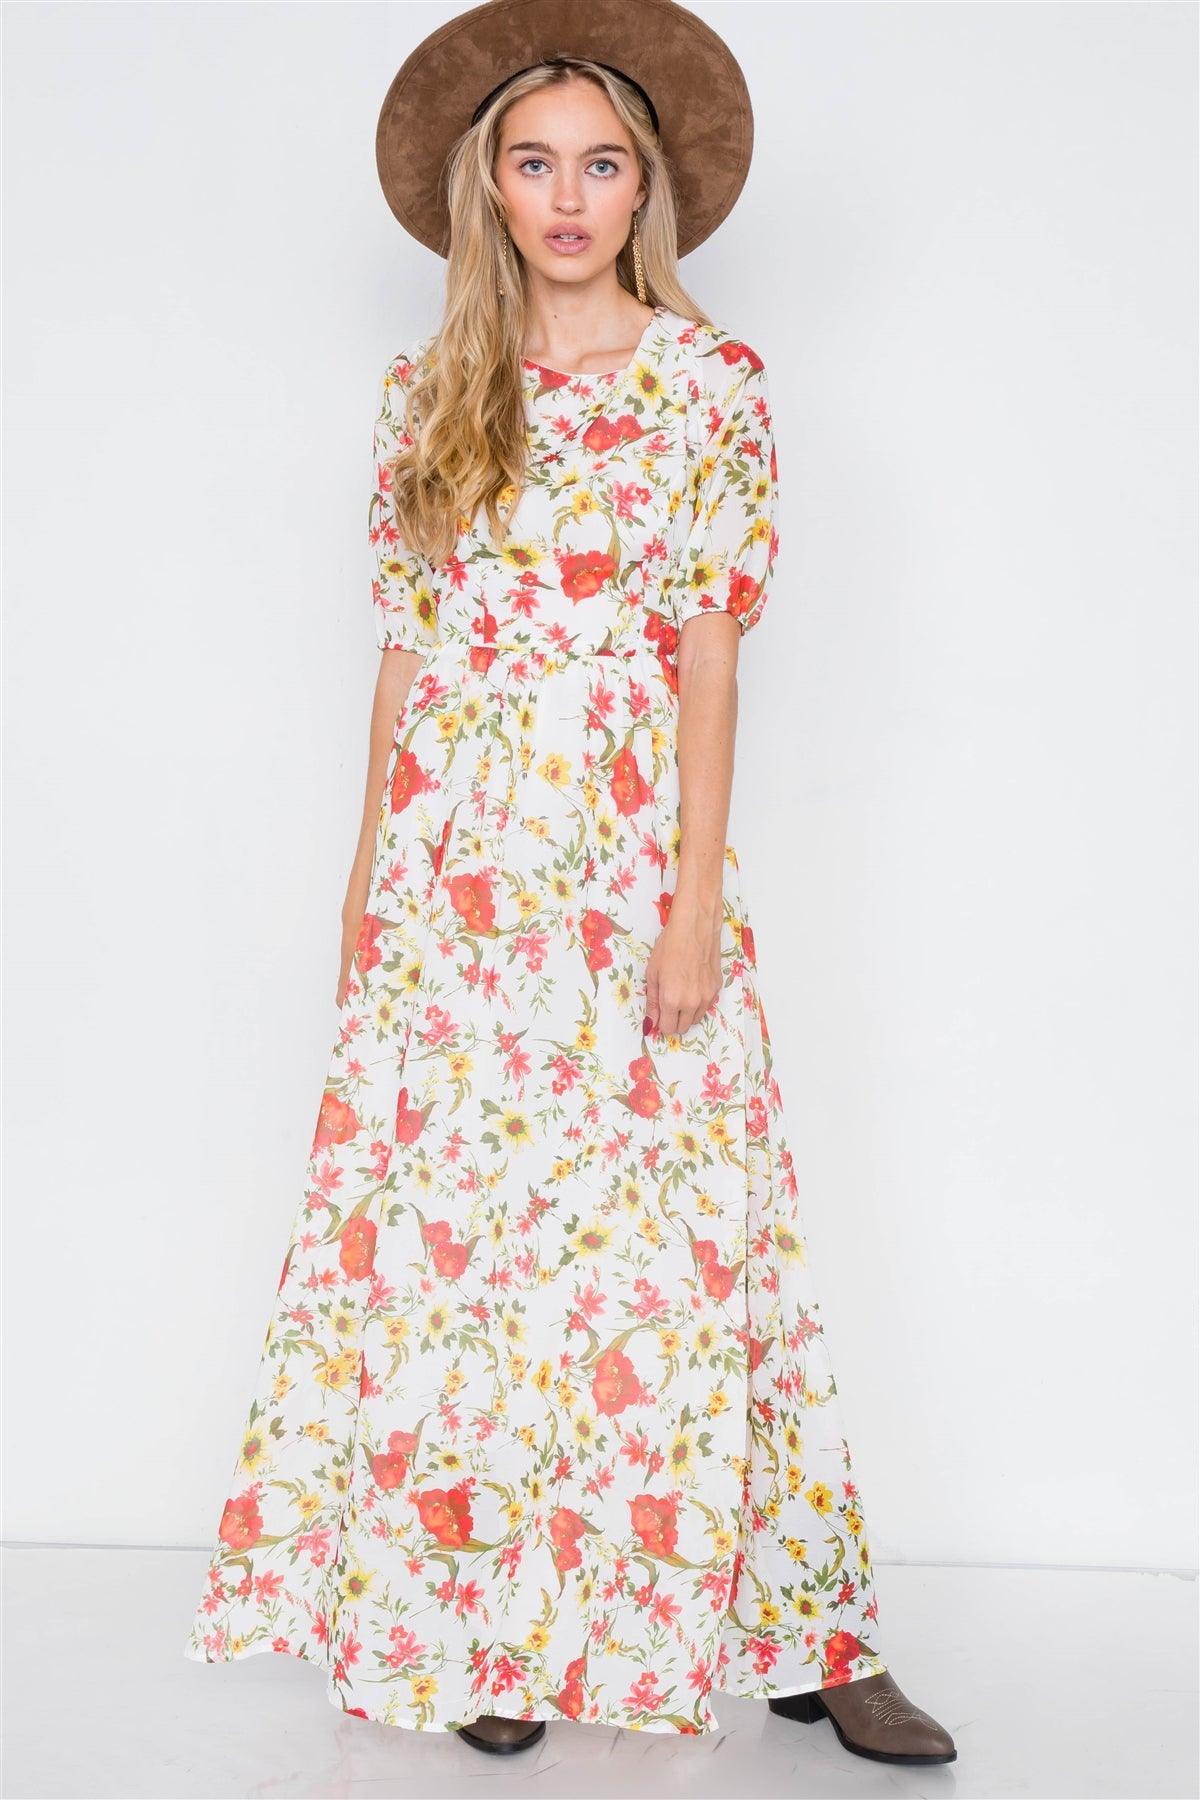 Beige Chic Semi-Sheer Floral Print Maxi Dress  /2-2-2